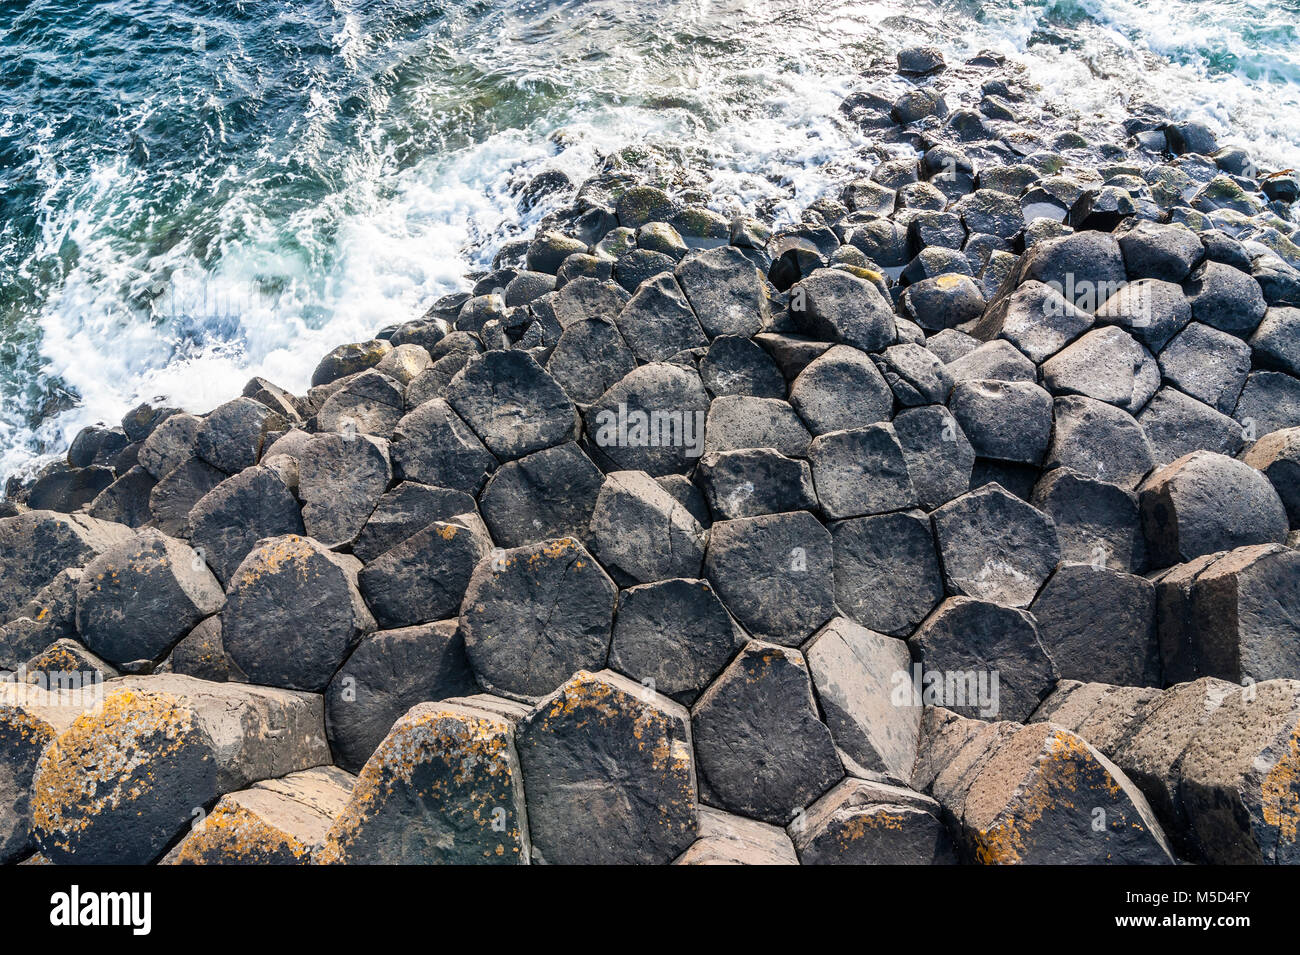 Giant's Causeway, Irlanda del Norte, Reino Unido Foto de stock